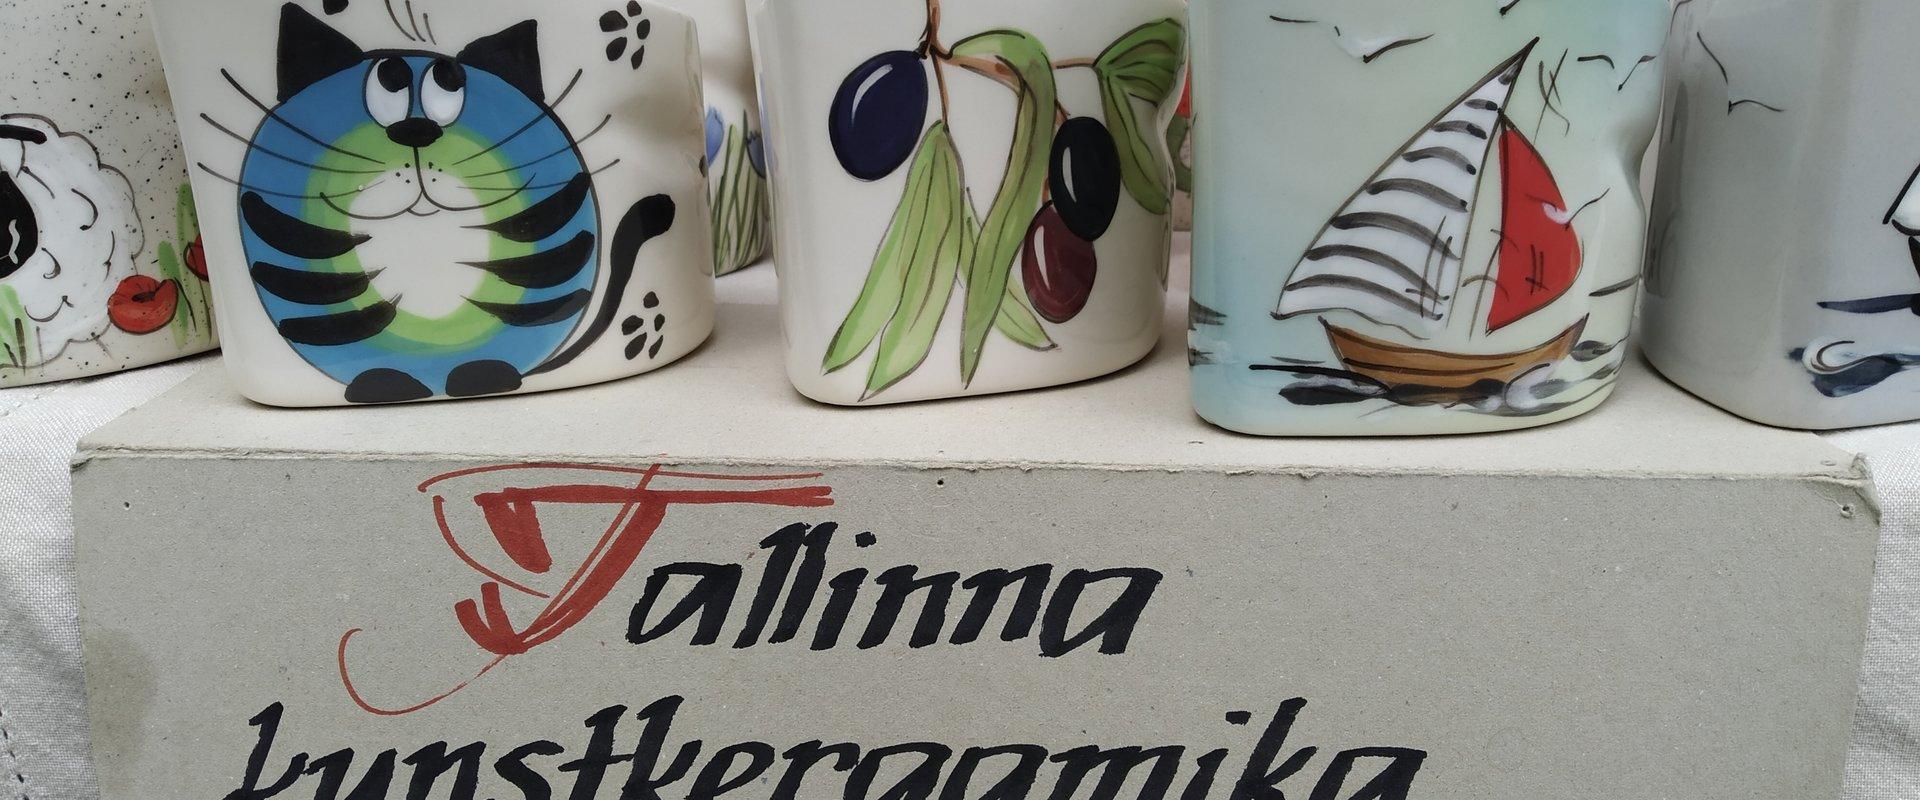 handmade-estonian-ceramics-products-tooted